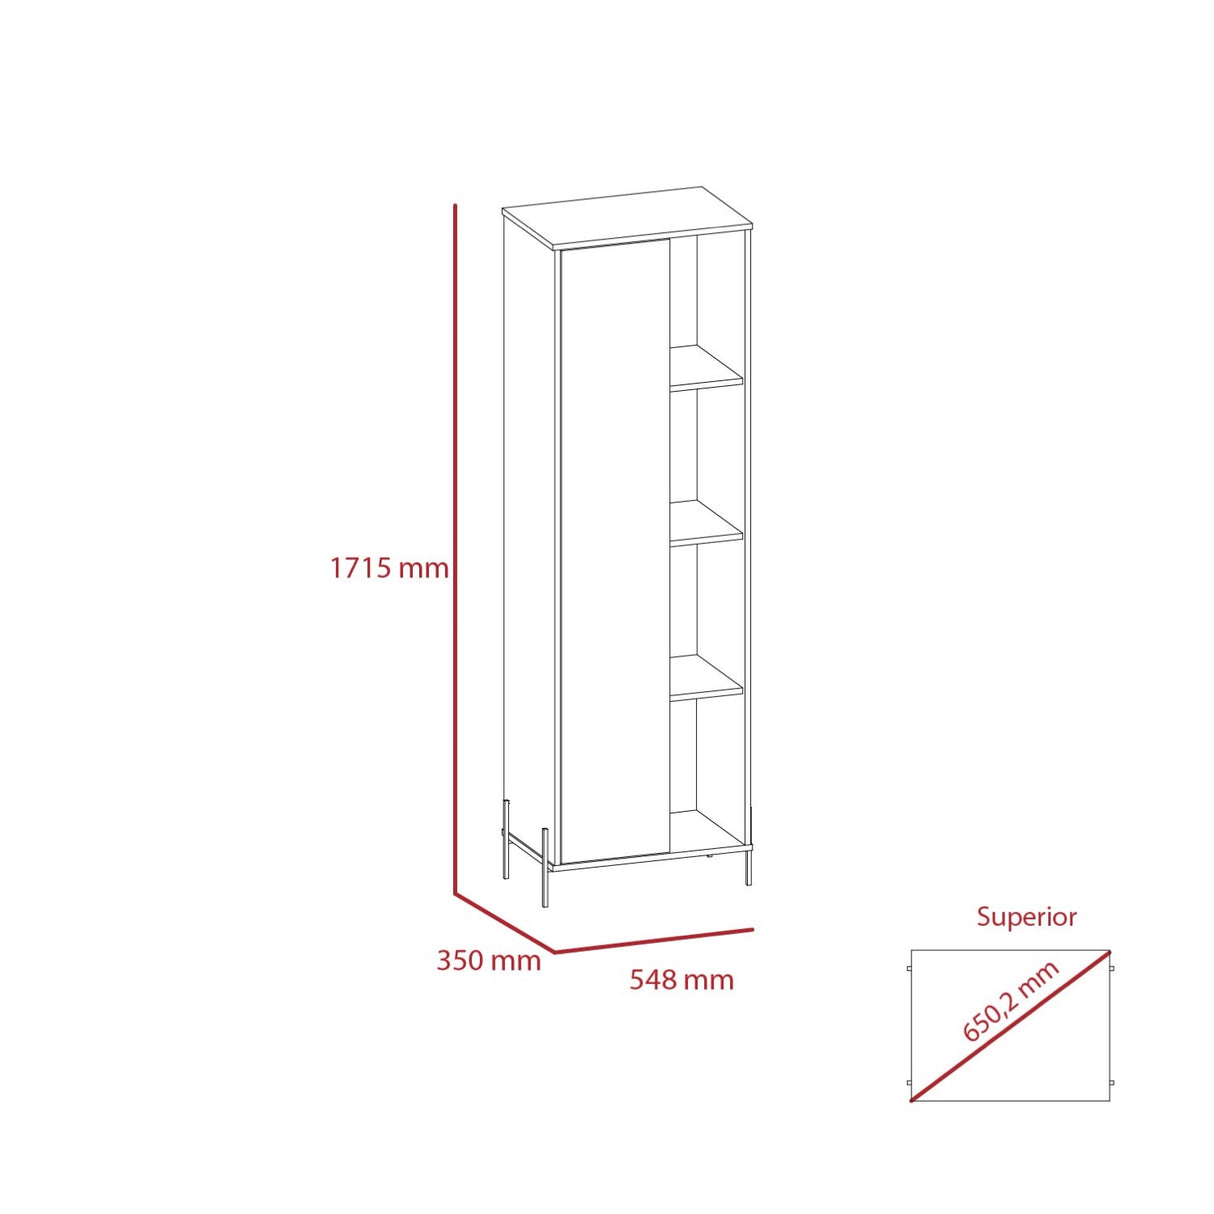 Dexter Tall Storage & Display Cabinet